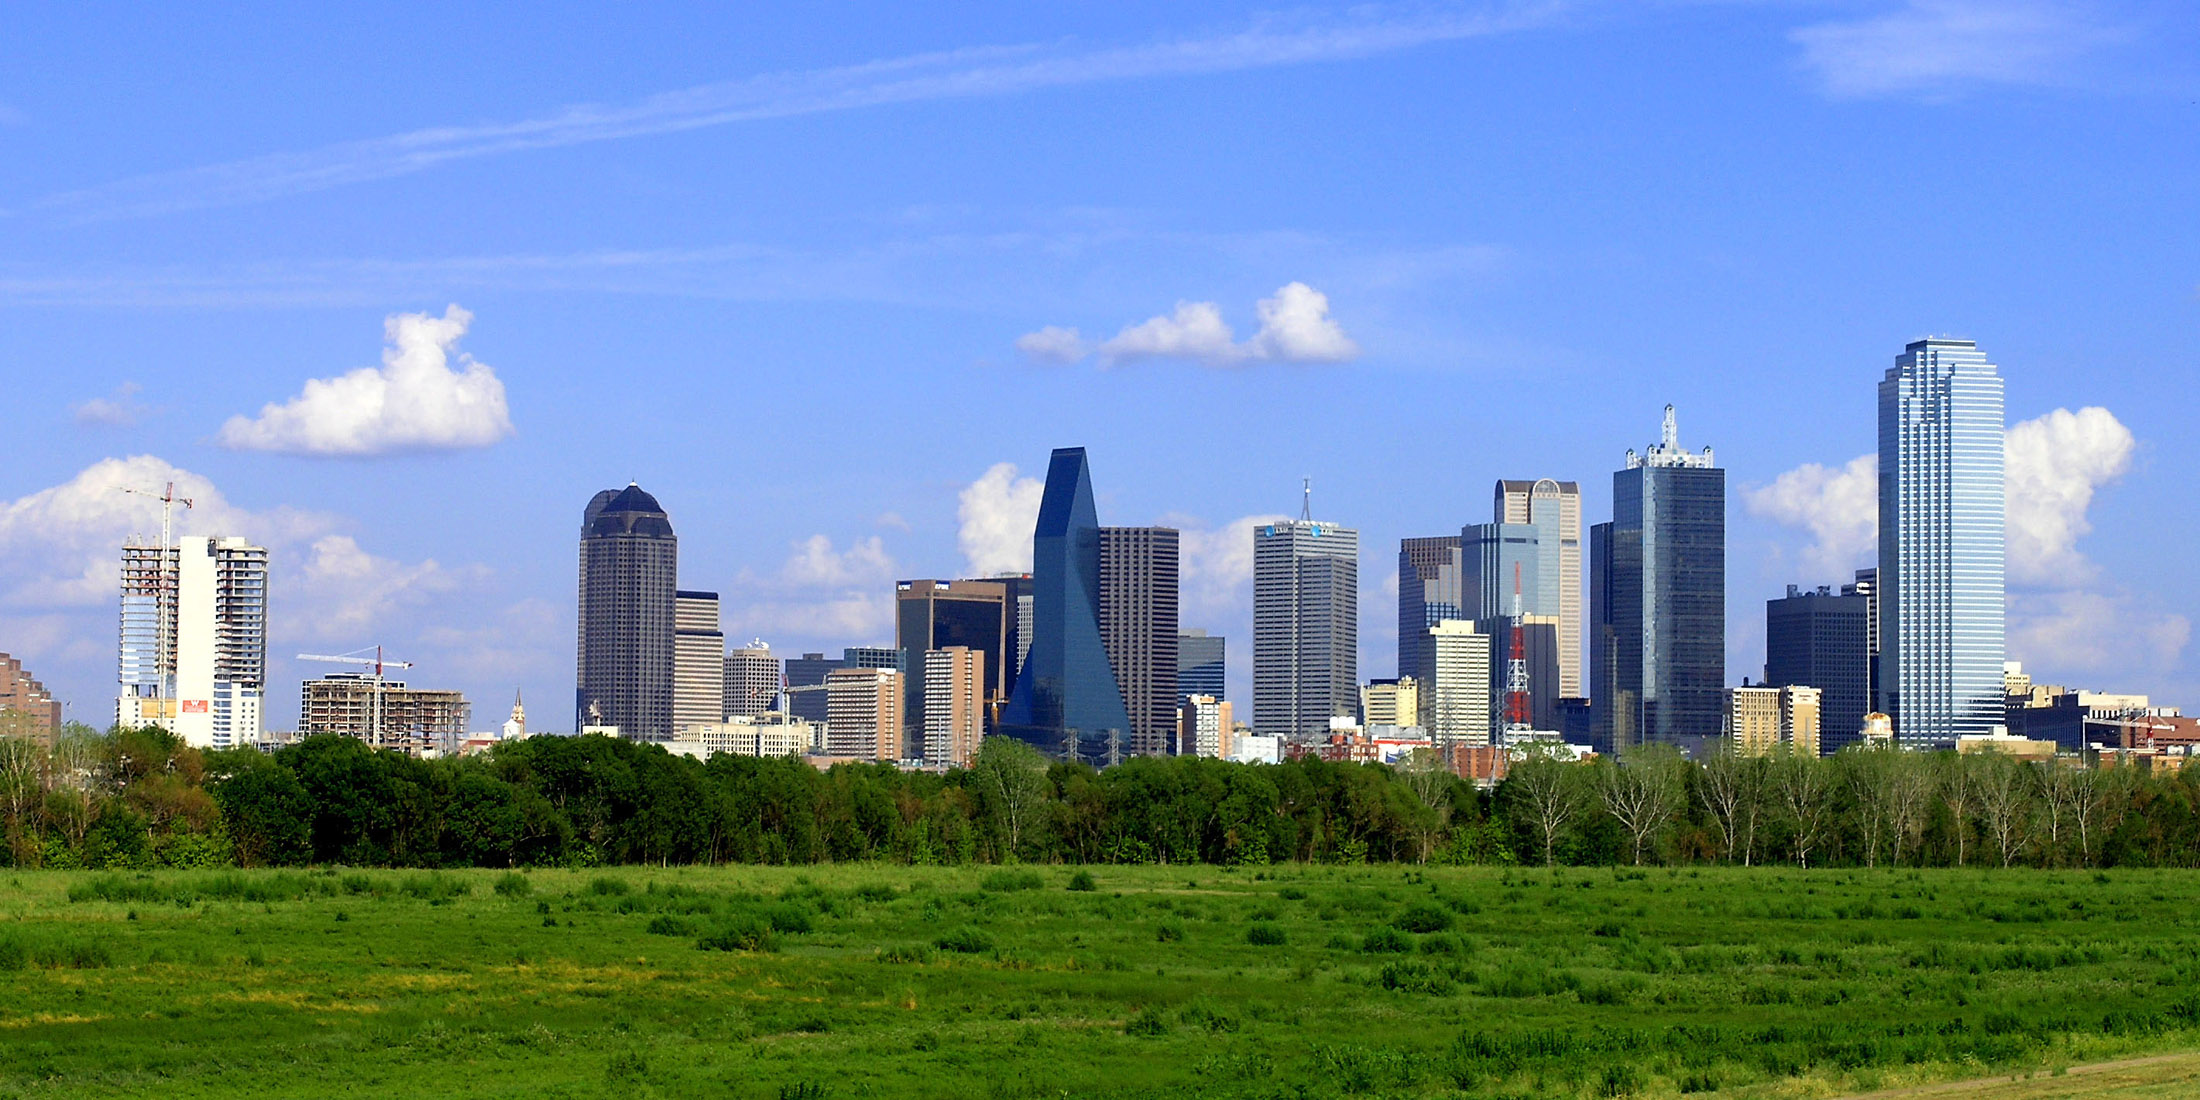 Dallas Skyline